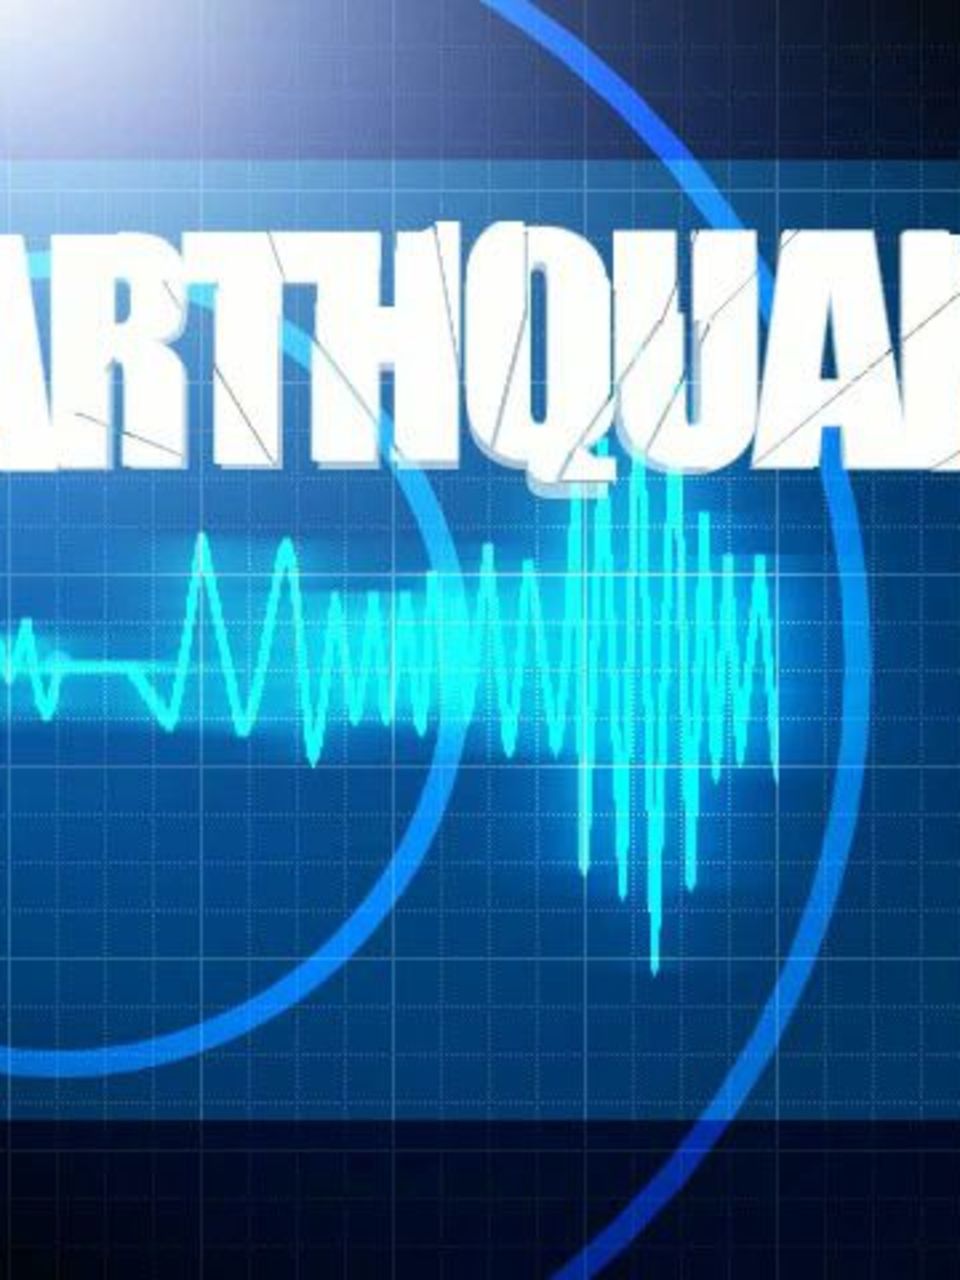 Usgs Confirms Small Earthquake In North Carolina Wlos